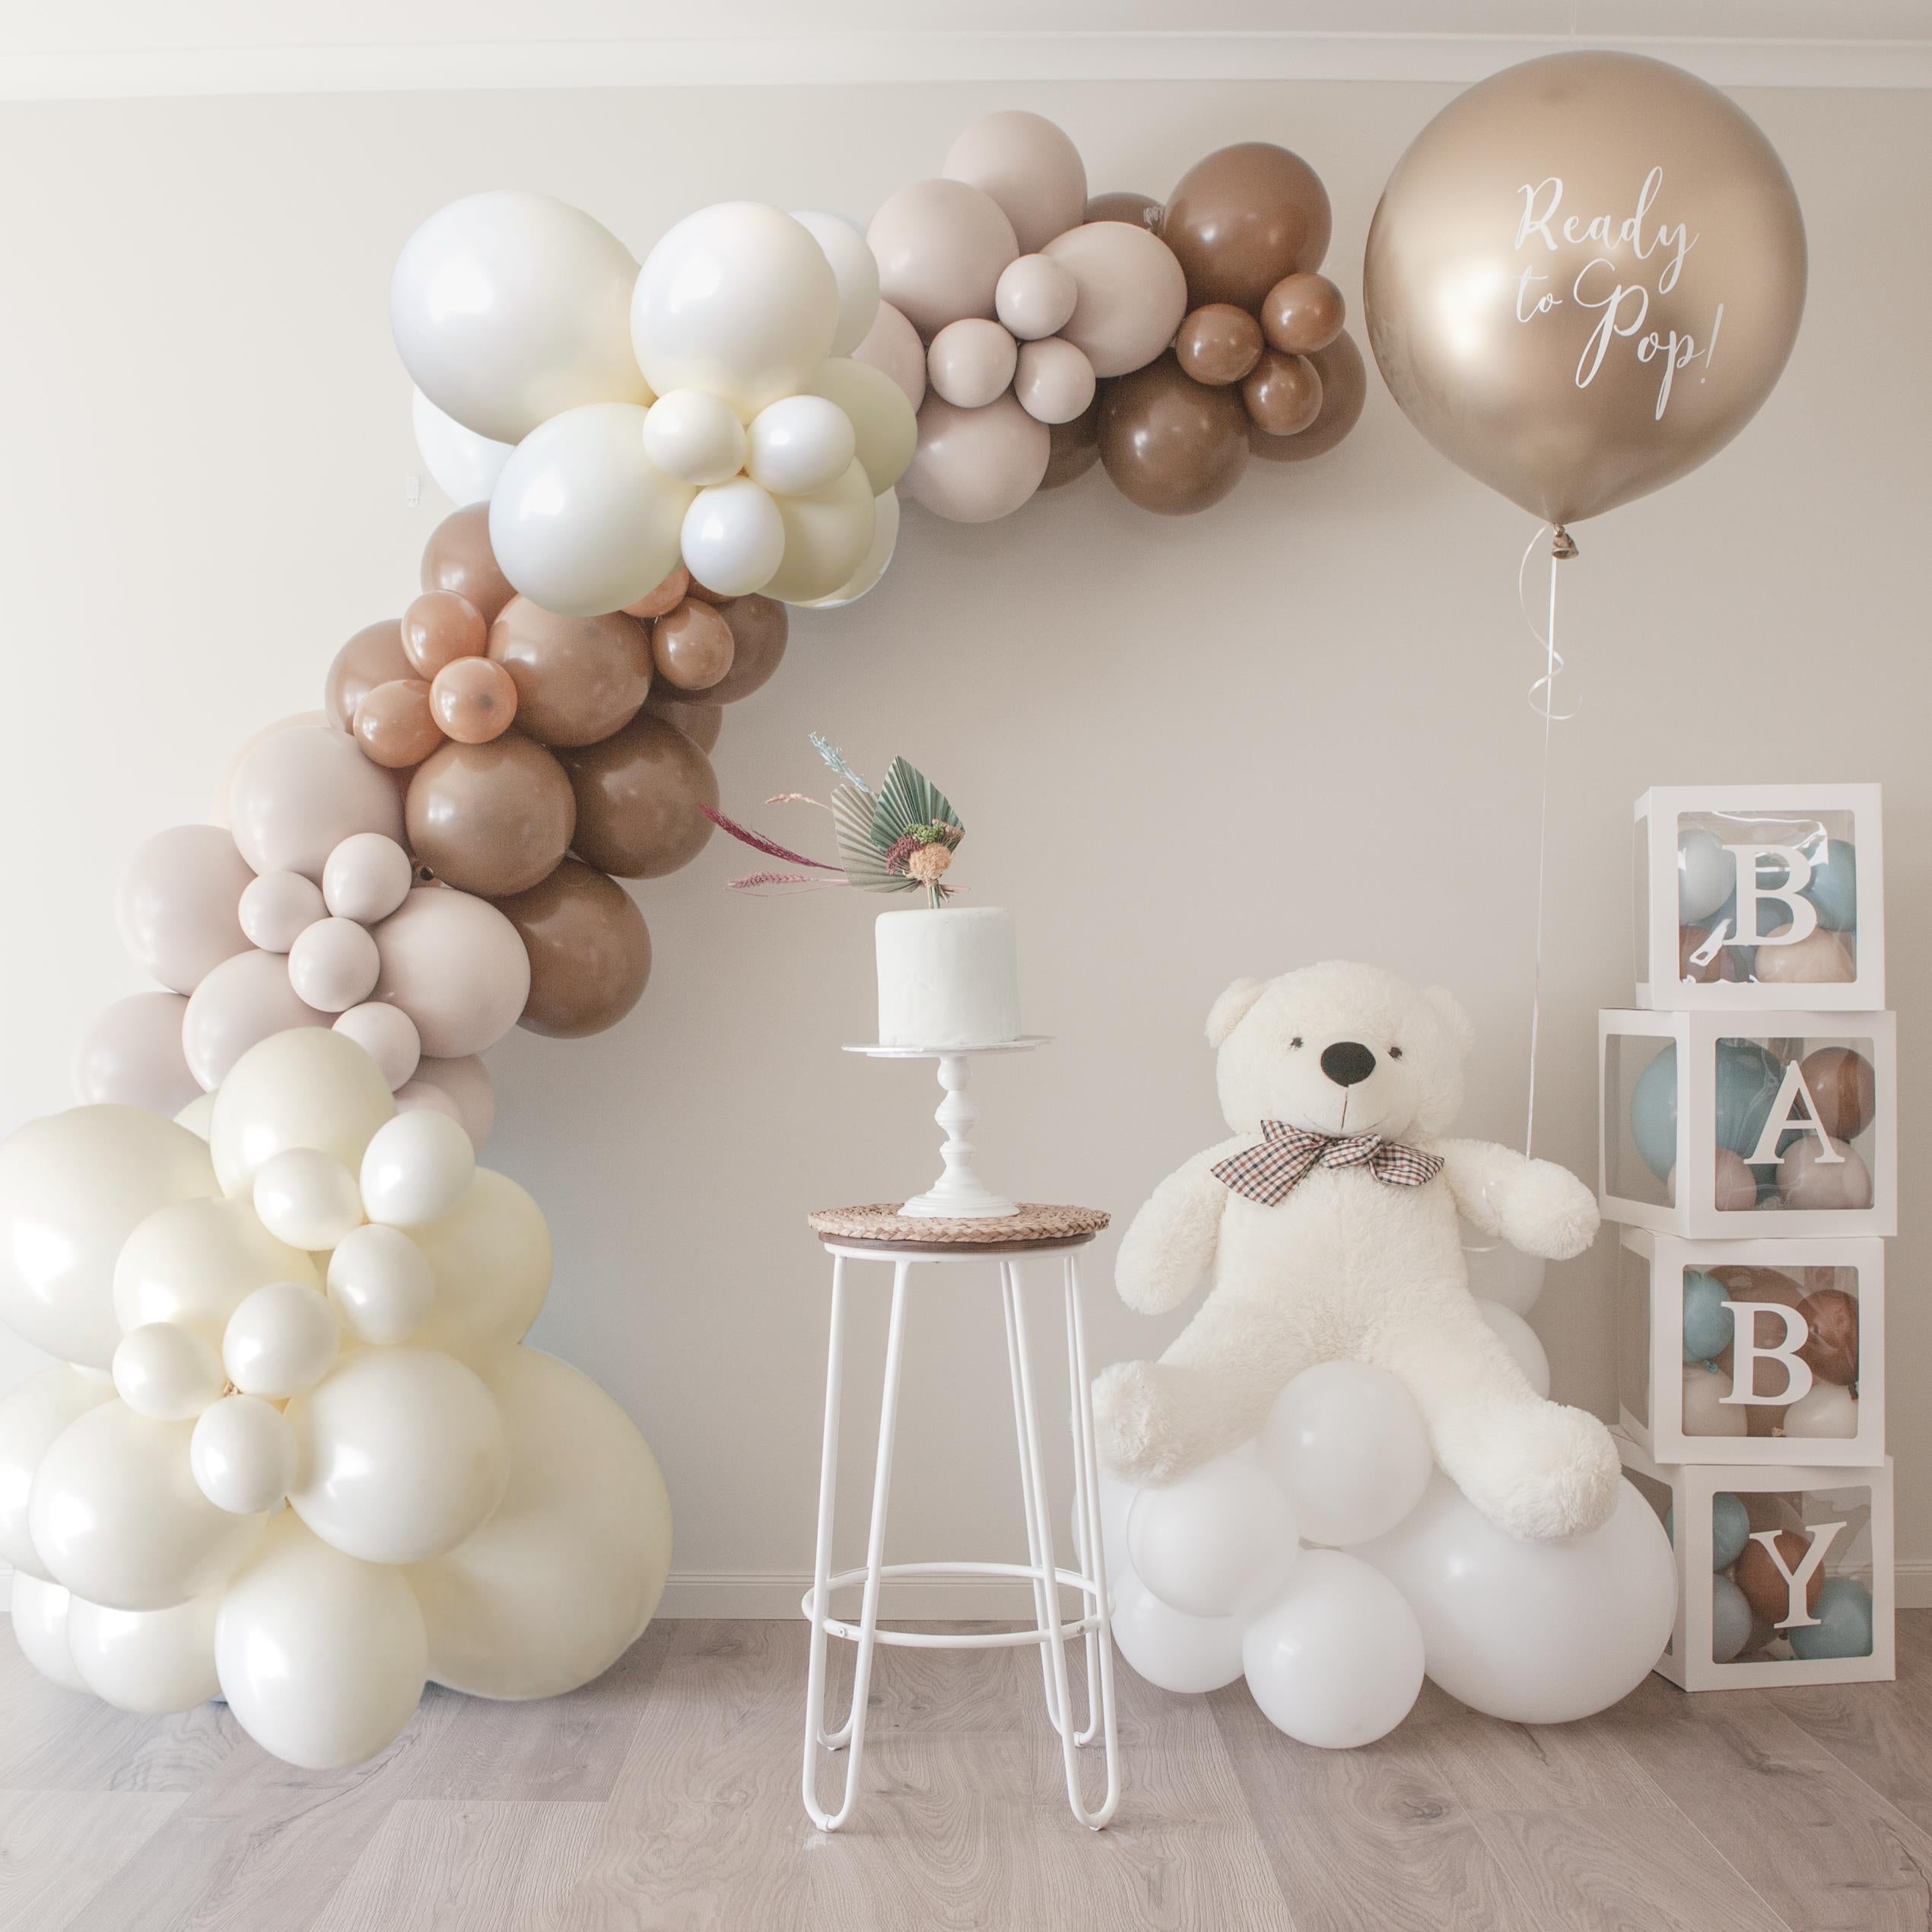 We Can't Bearly Wait Gender Reveal Balloon Garland DIY Kit - Lazy Bear